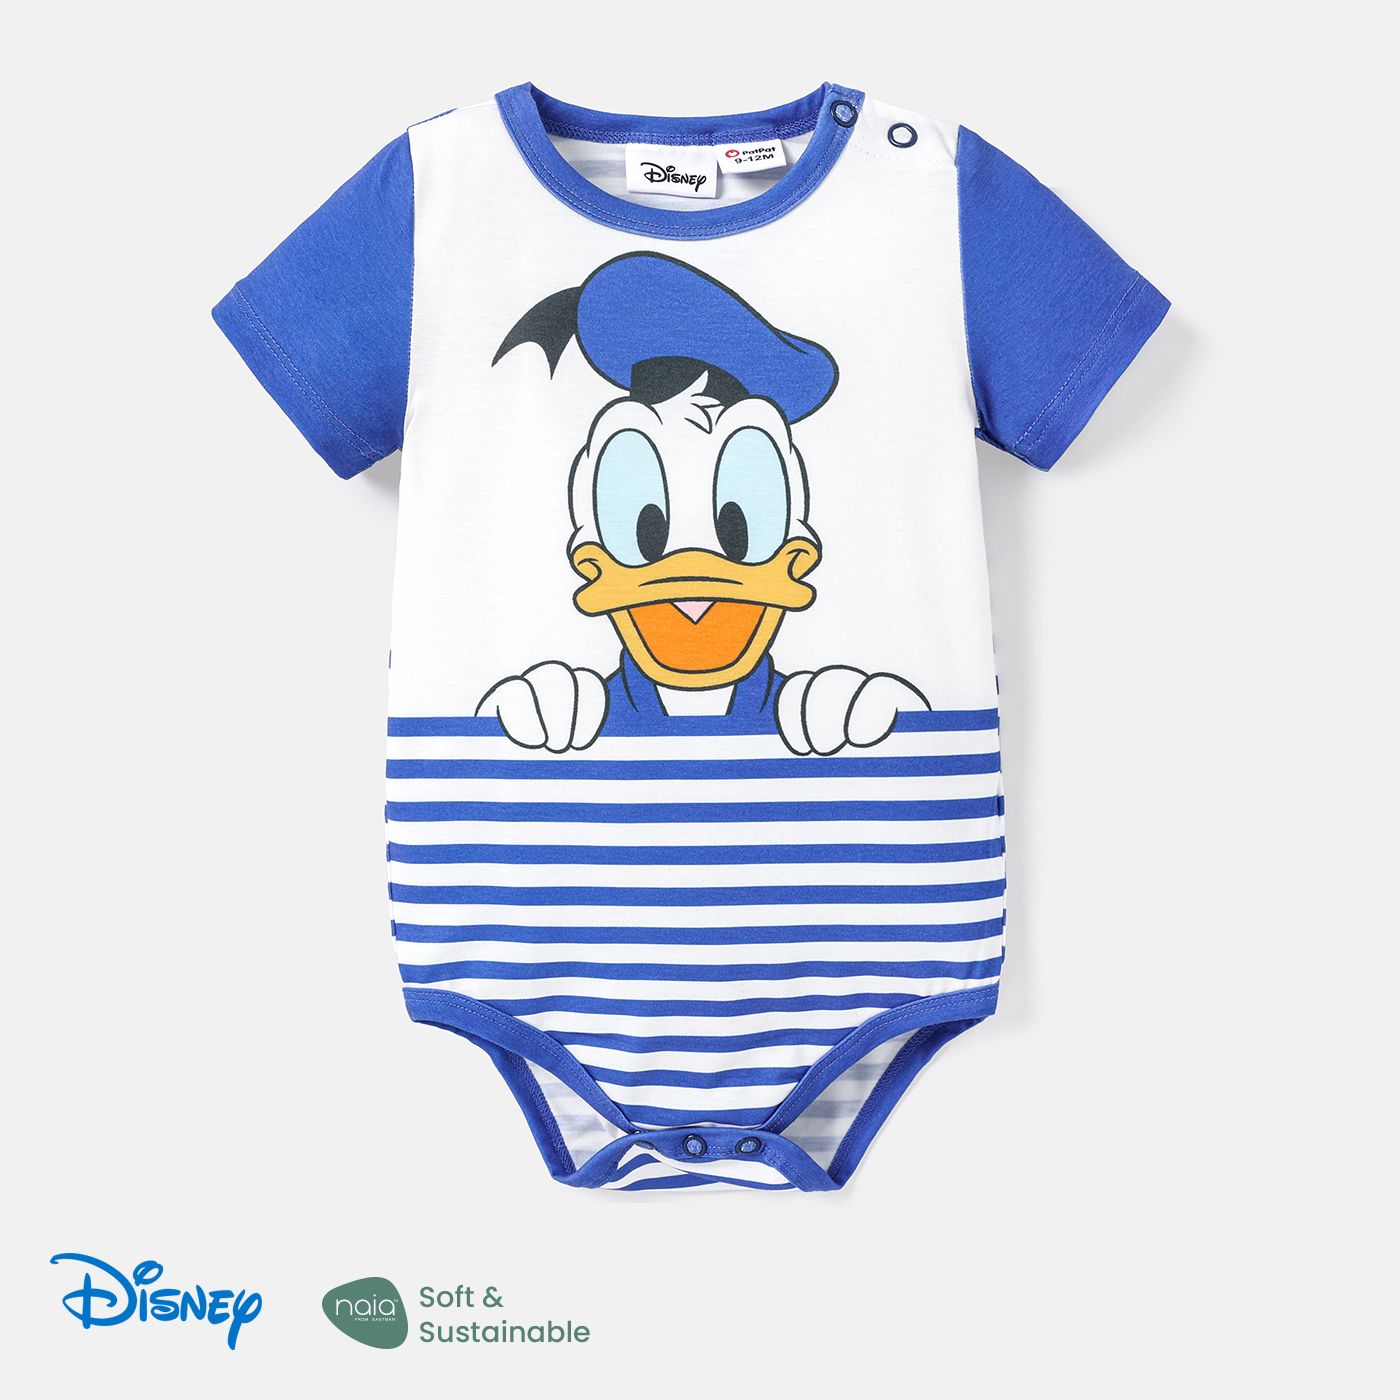 Disney Mickey And Friends Baby Boy/Girl Spliced Short-sleeve Graphic Striped Naiaâ¢ Romper